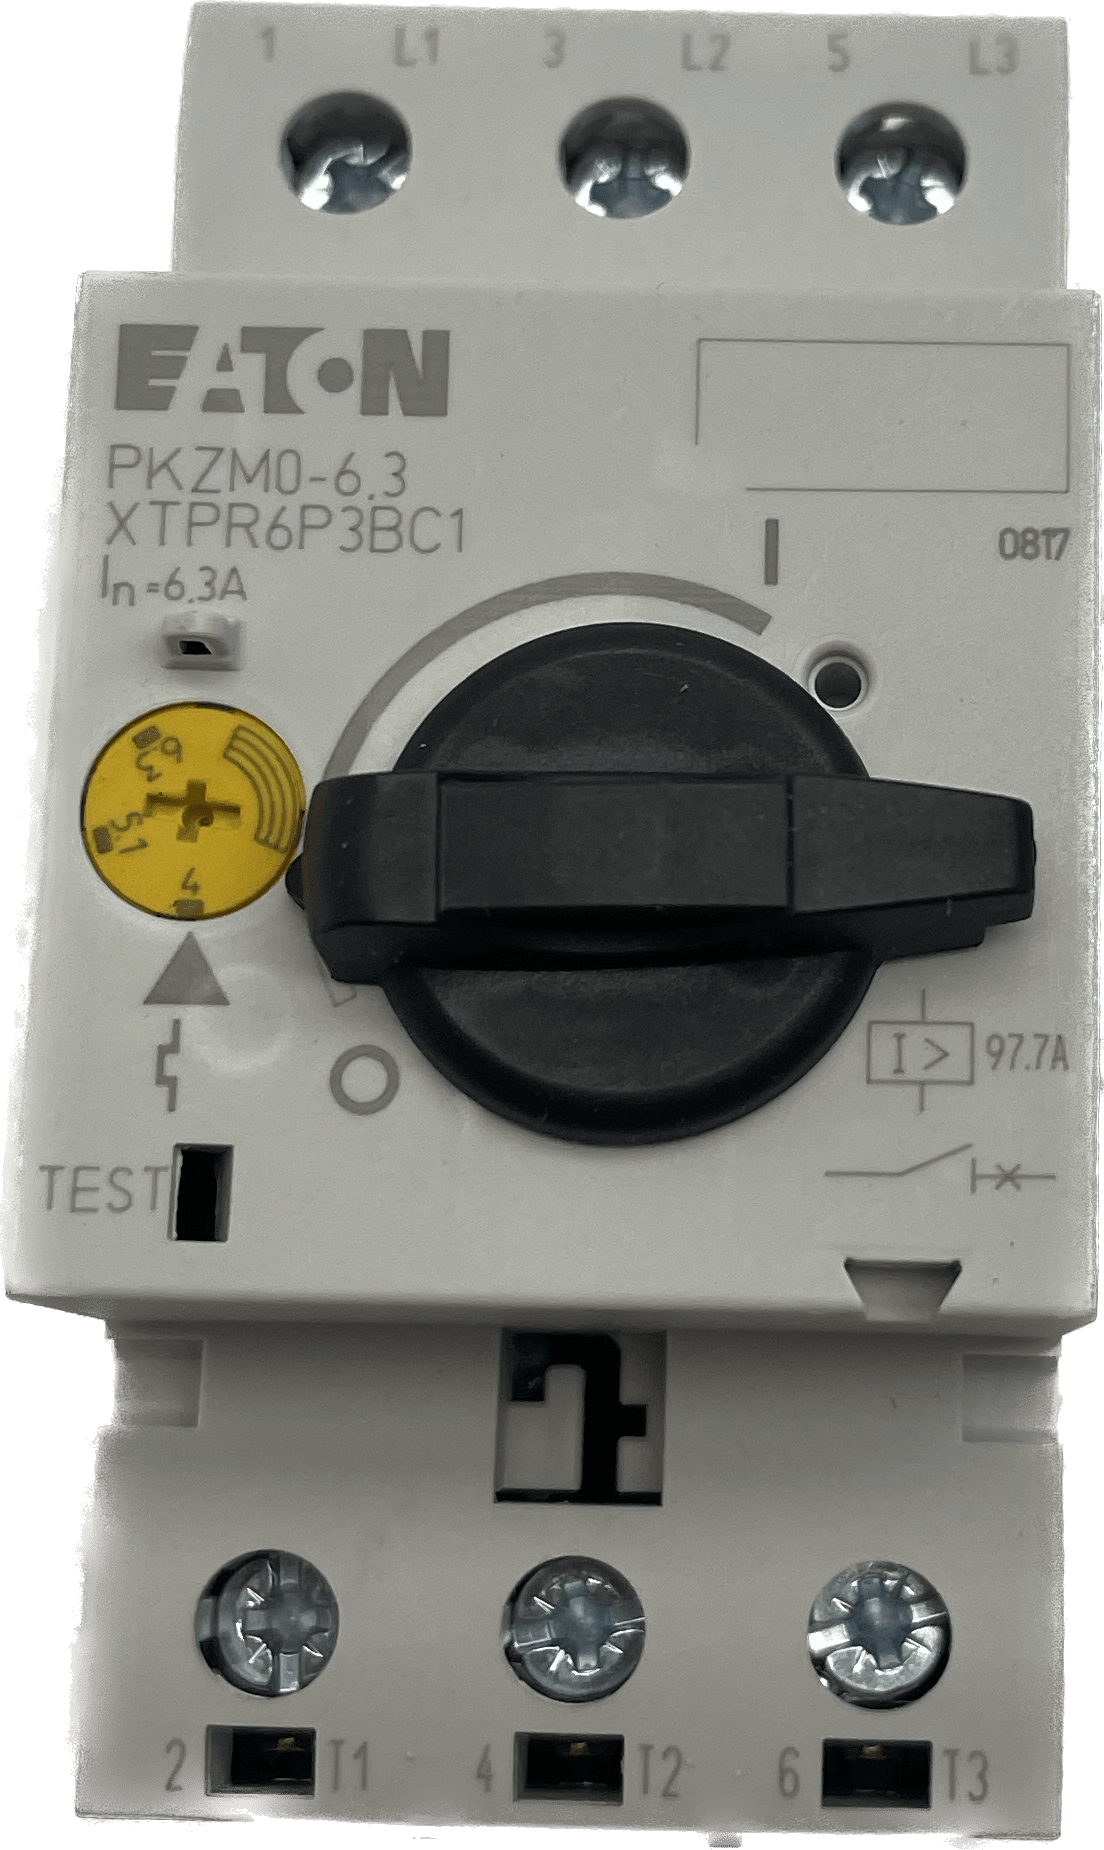 EATON Motorschutzschalter mit Drehschalter PKZM0-6,3 - #product_category# | Klenk Maschinenhandel